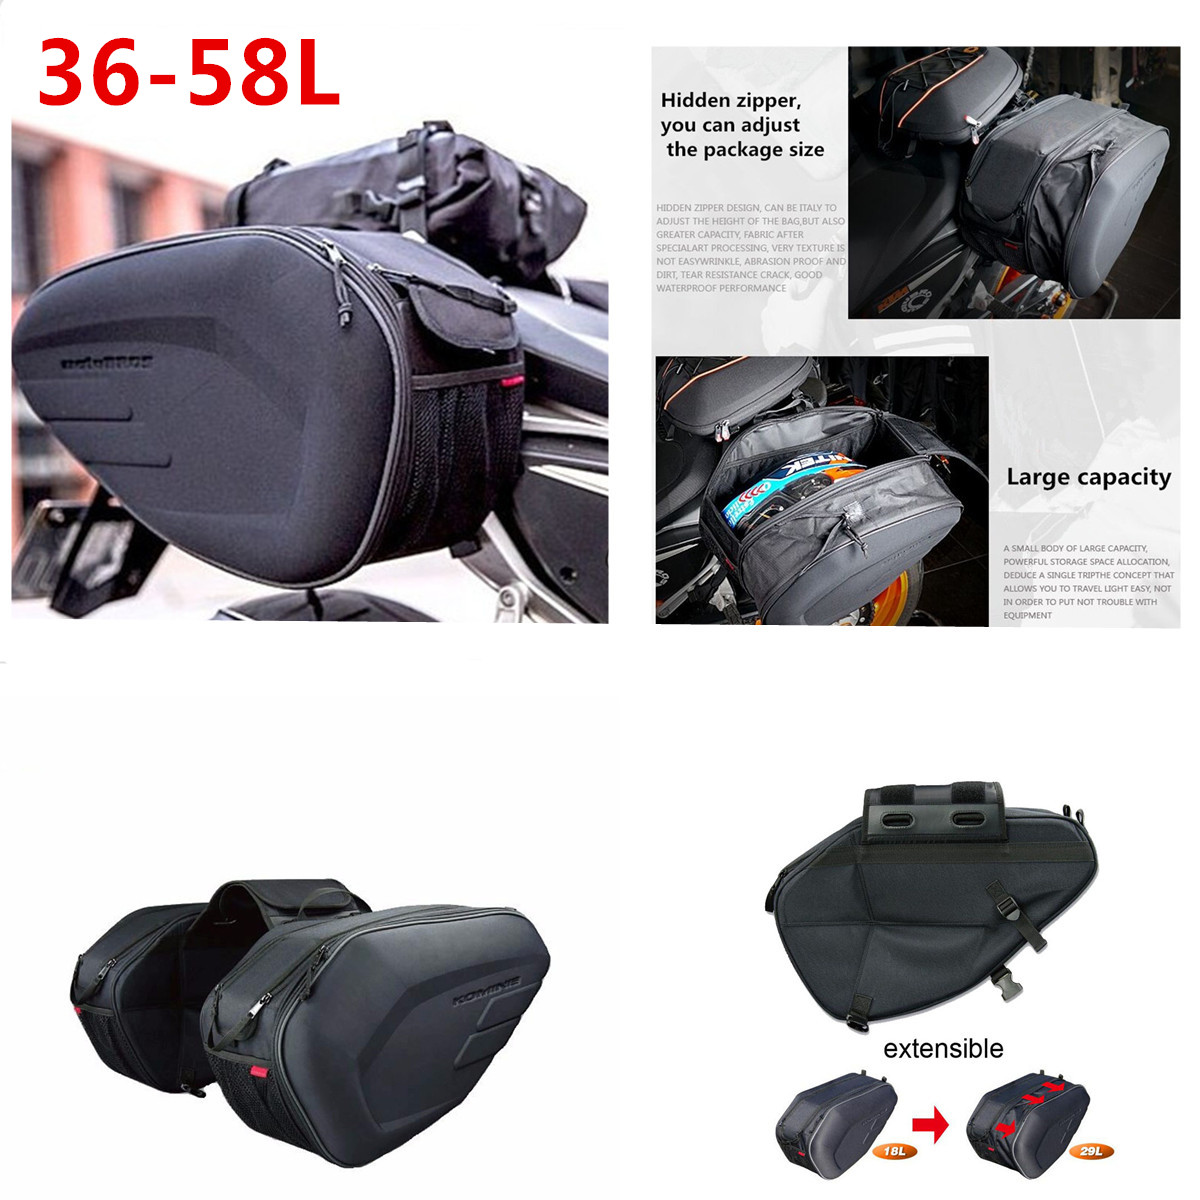 Universal Motorcycle Pannier Bag Luggage Saddle Bag w/ Rain Cover Large Capacity